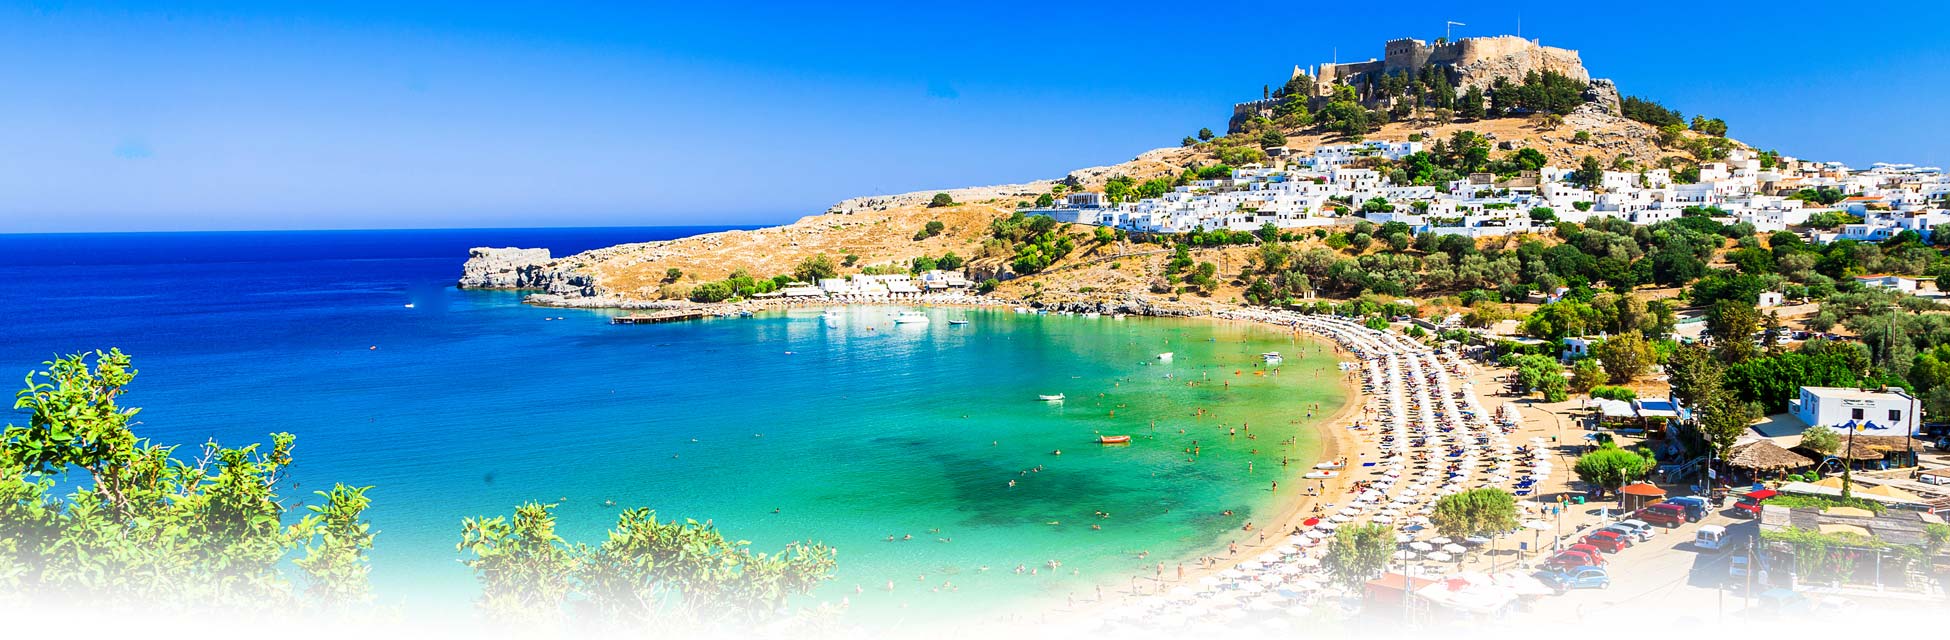 griekenland-lindos-rhodos.jpg